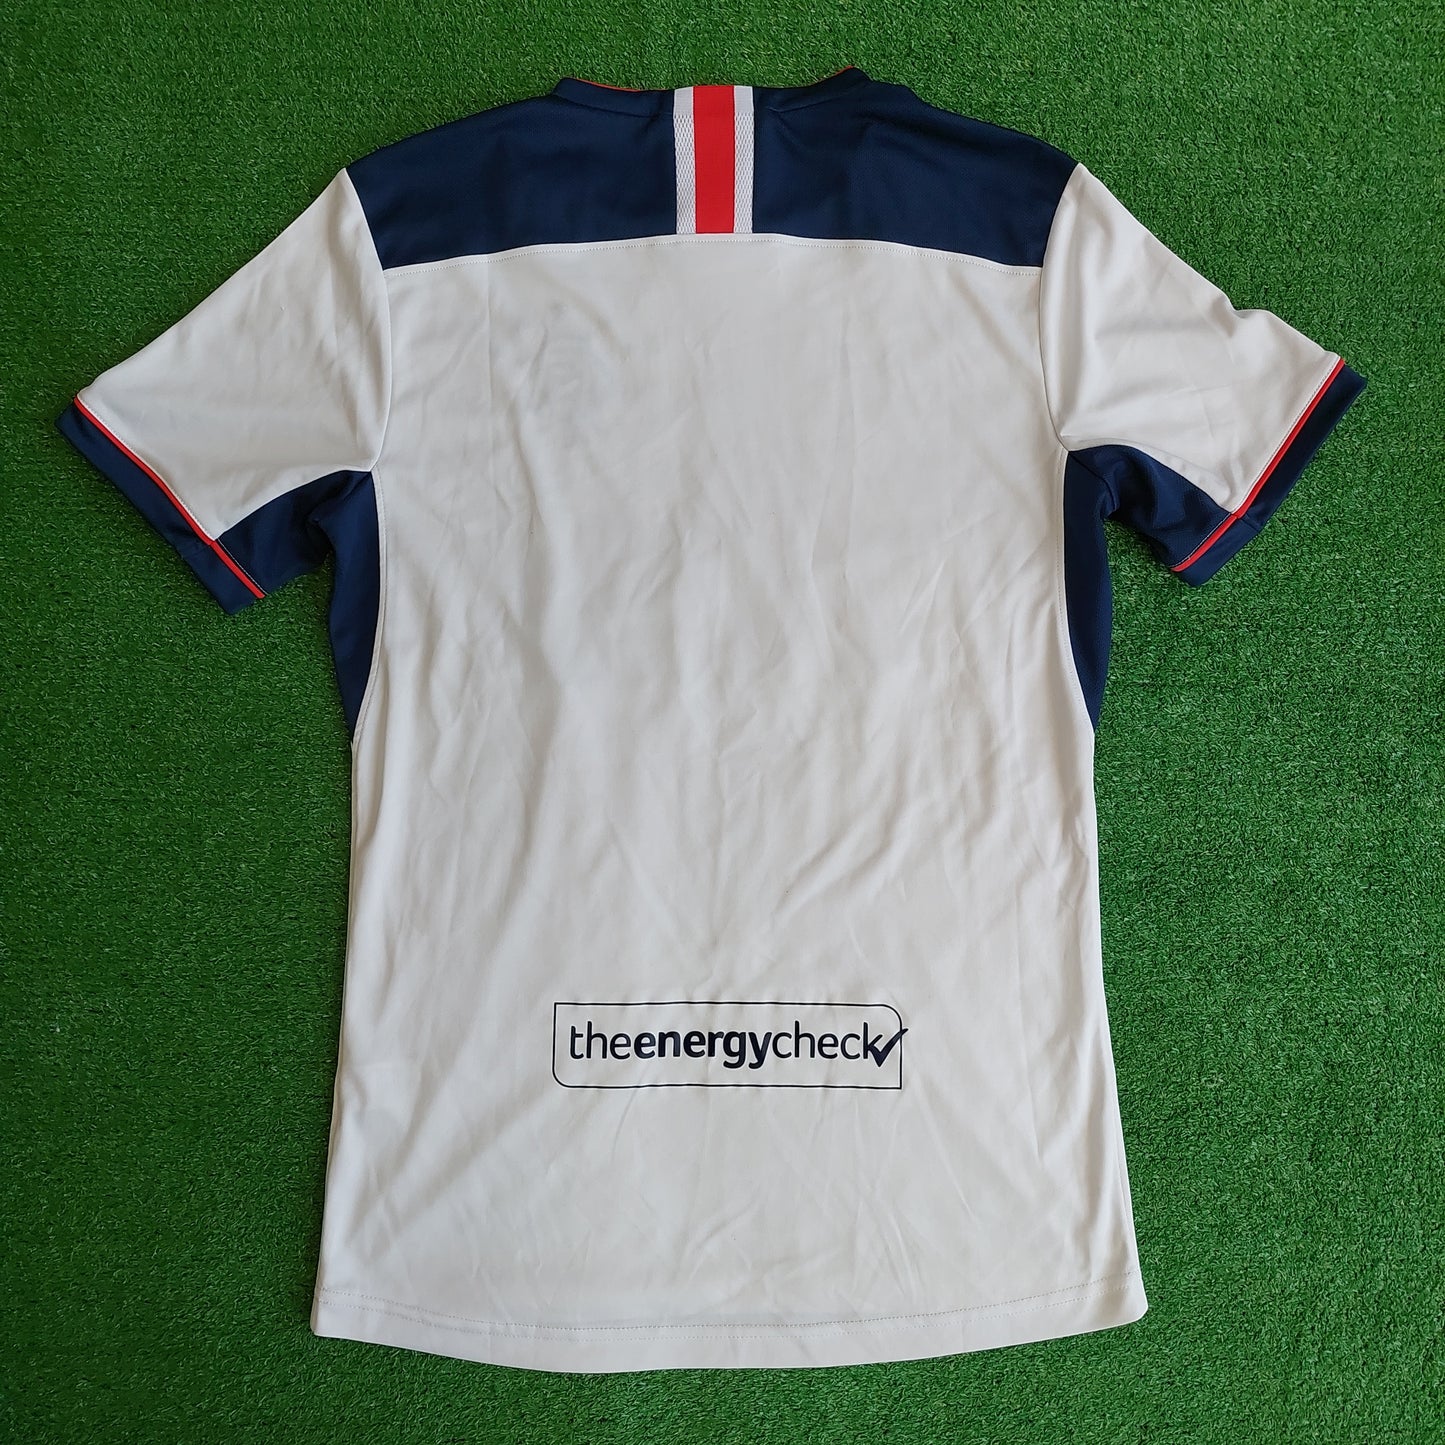 Rangers F.C. 2020/21 Away Shirt (Very good) - Size S